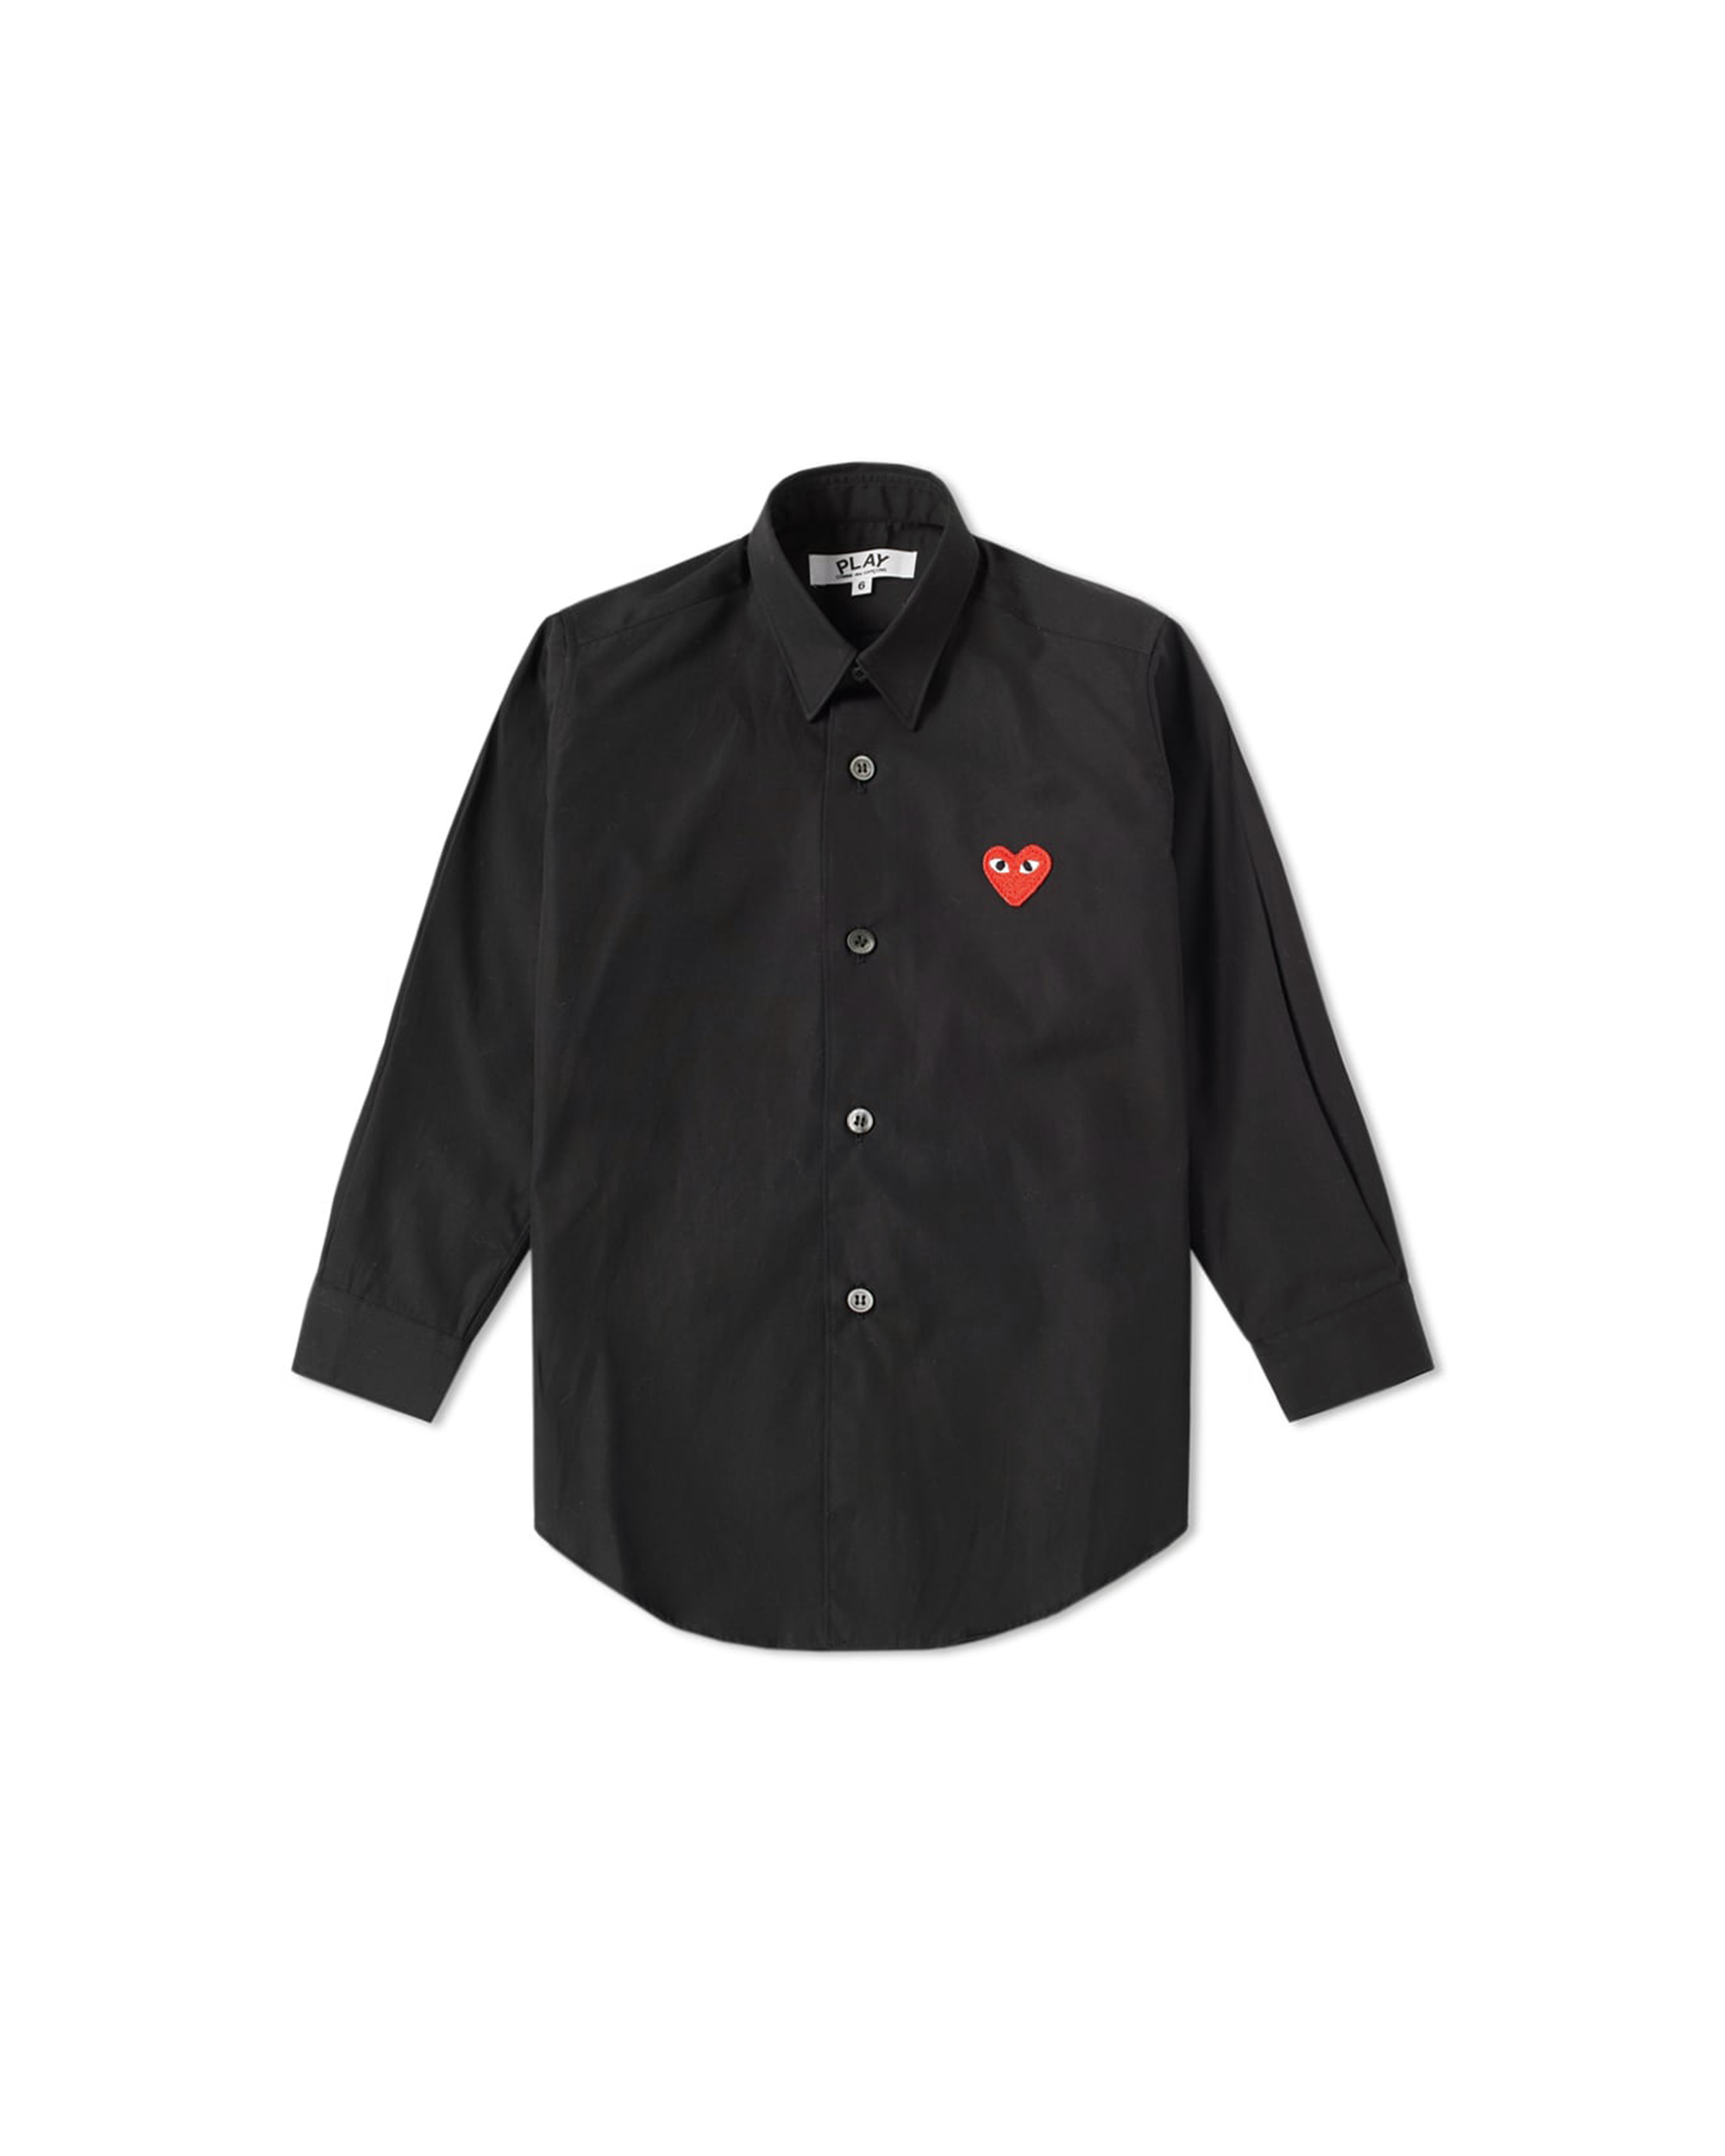 Heart Logo Button Down Shirt - Black / Red